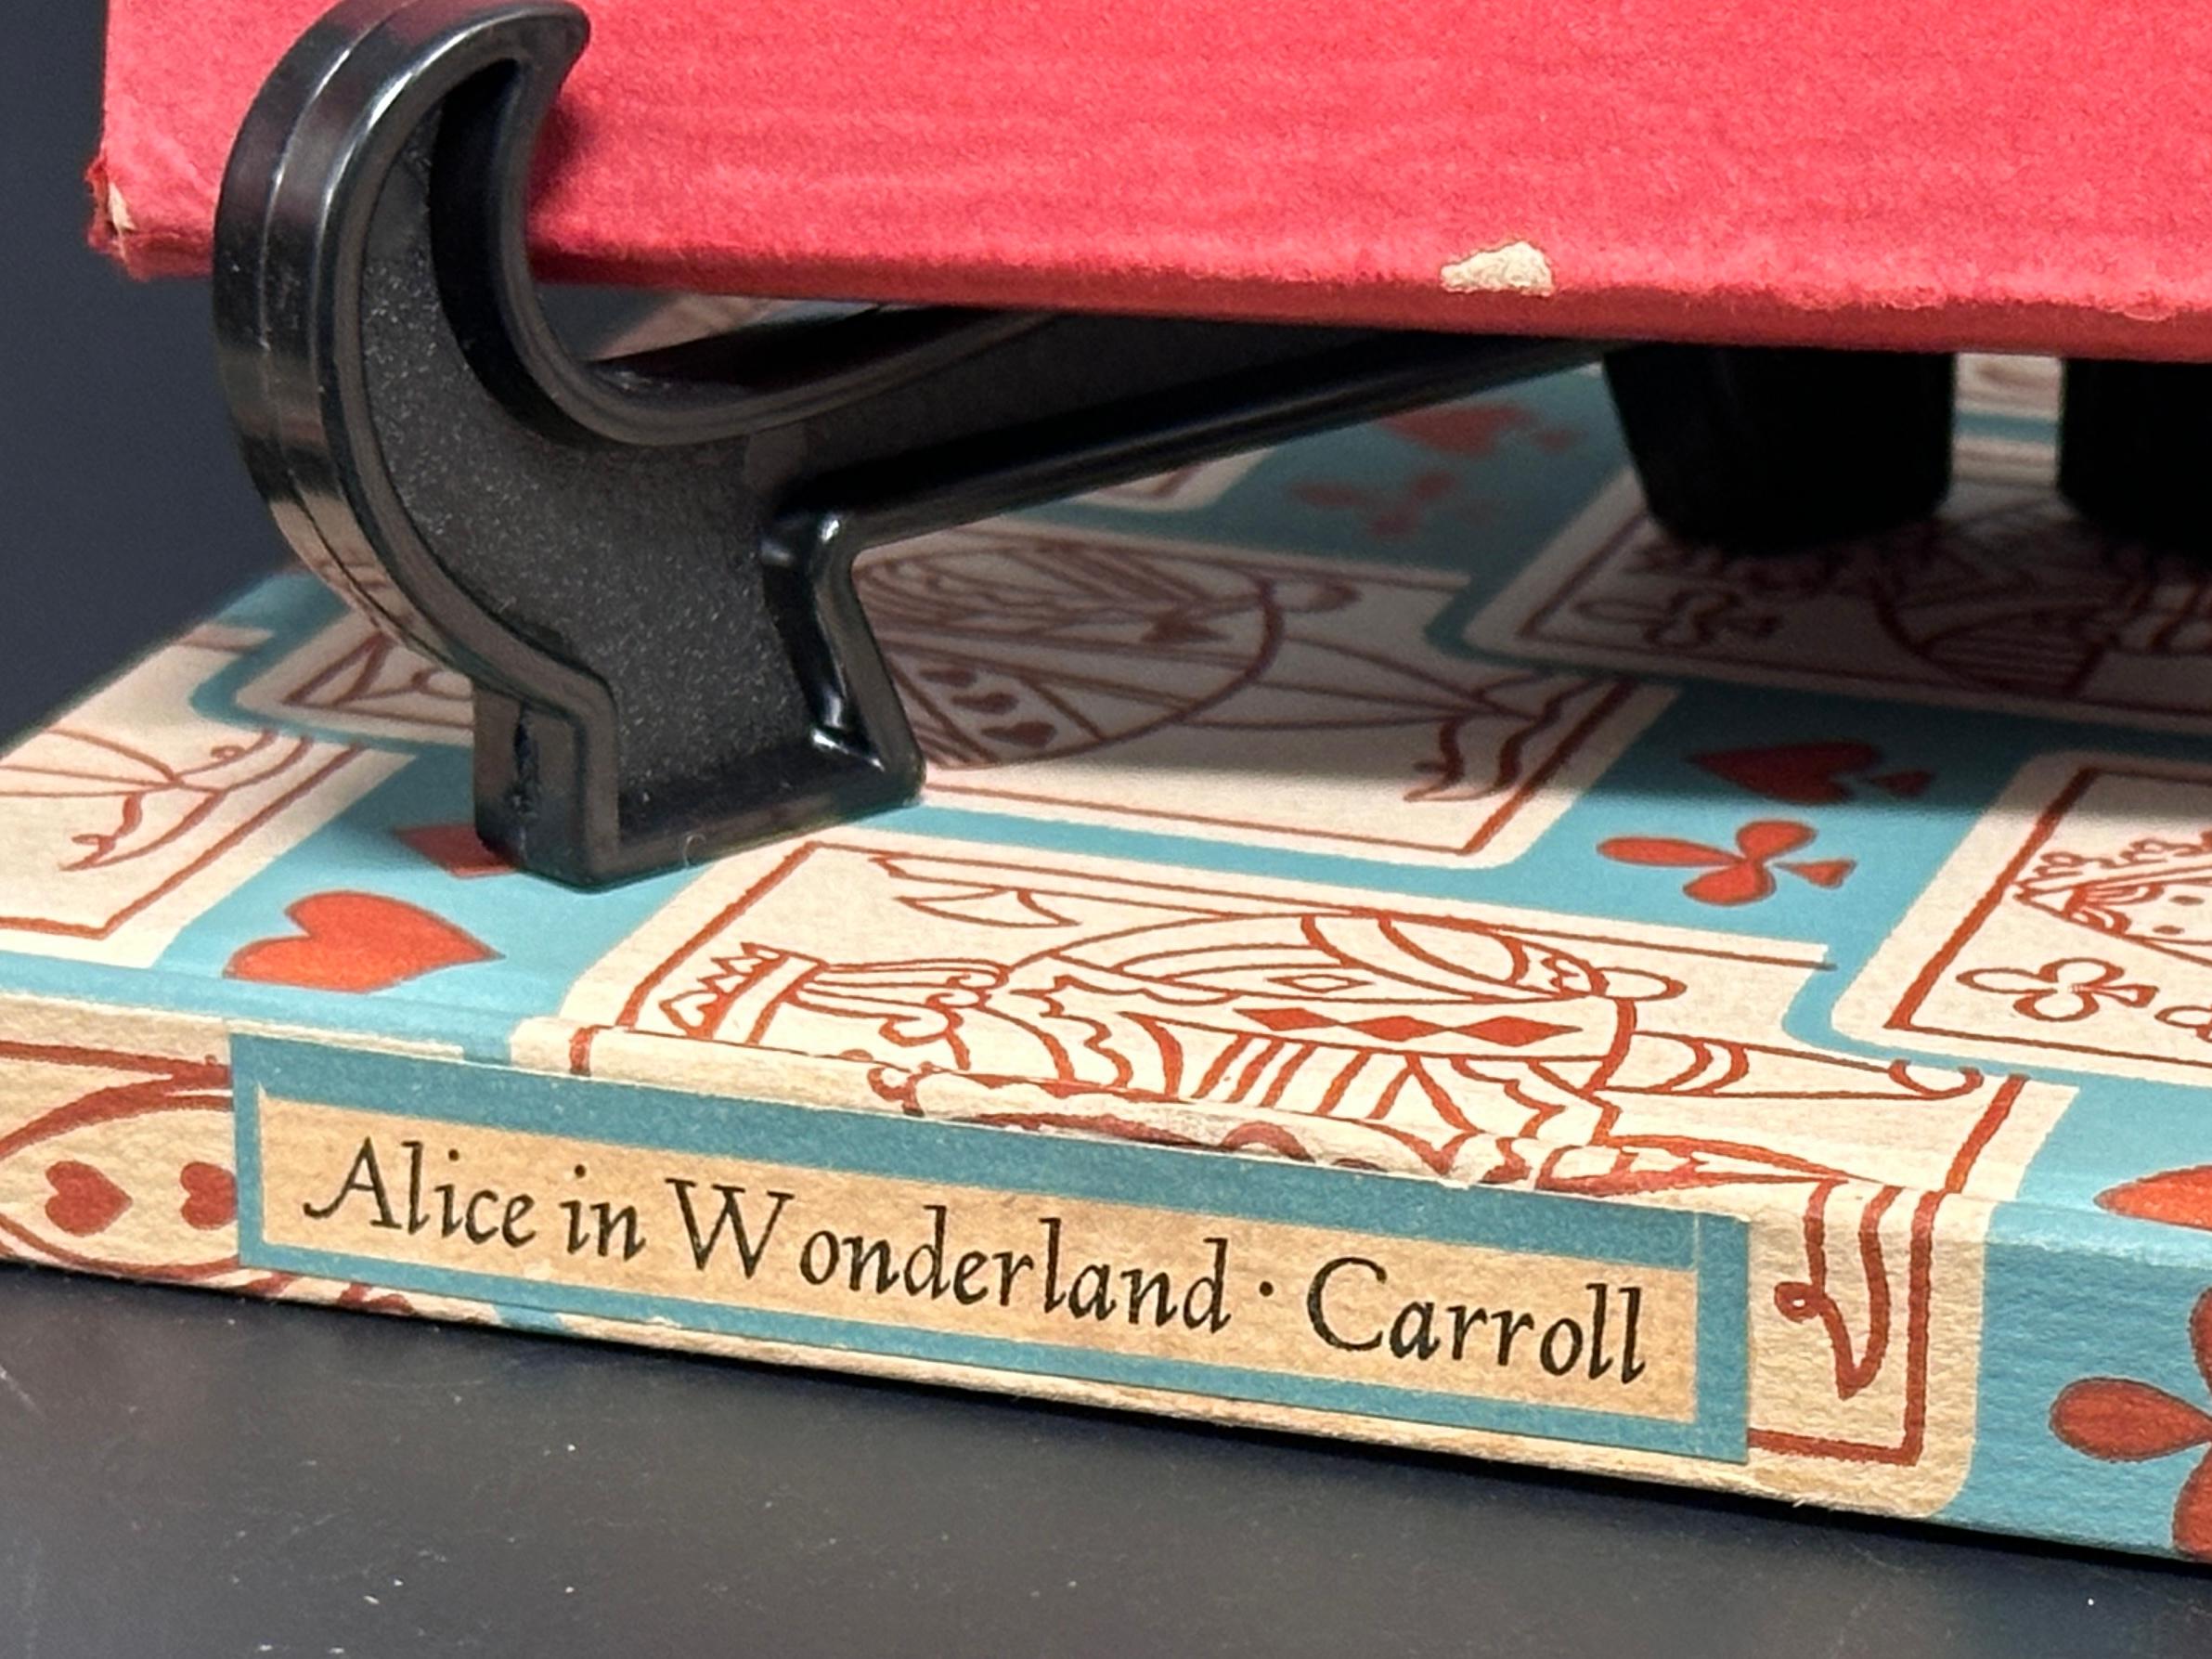 Lewis Carroll Alice in Wonderland Books